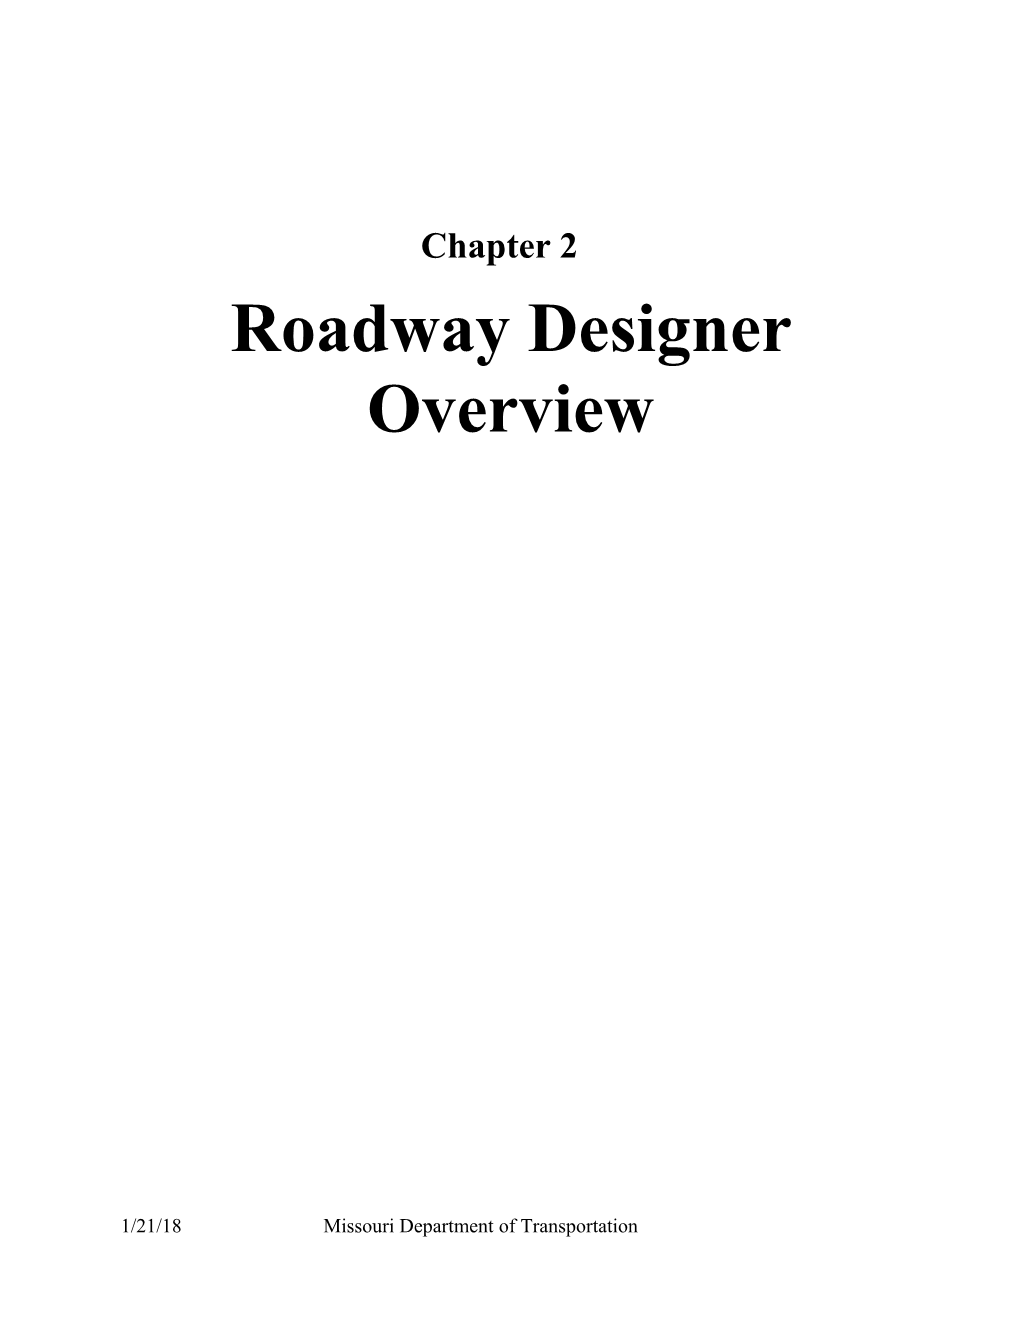 GEOPAK Roadway Designer Chapter 2: Overview